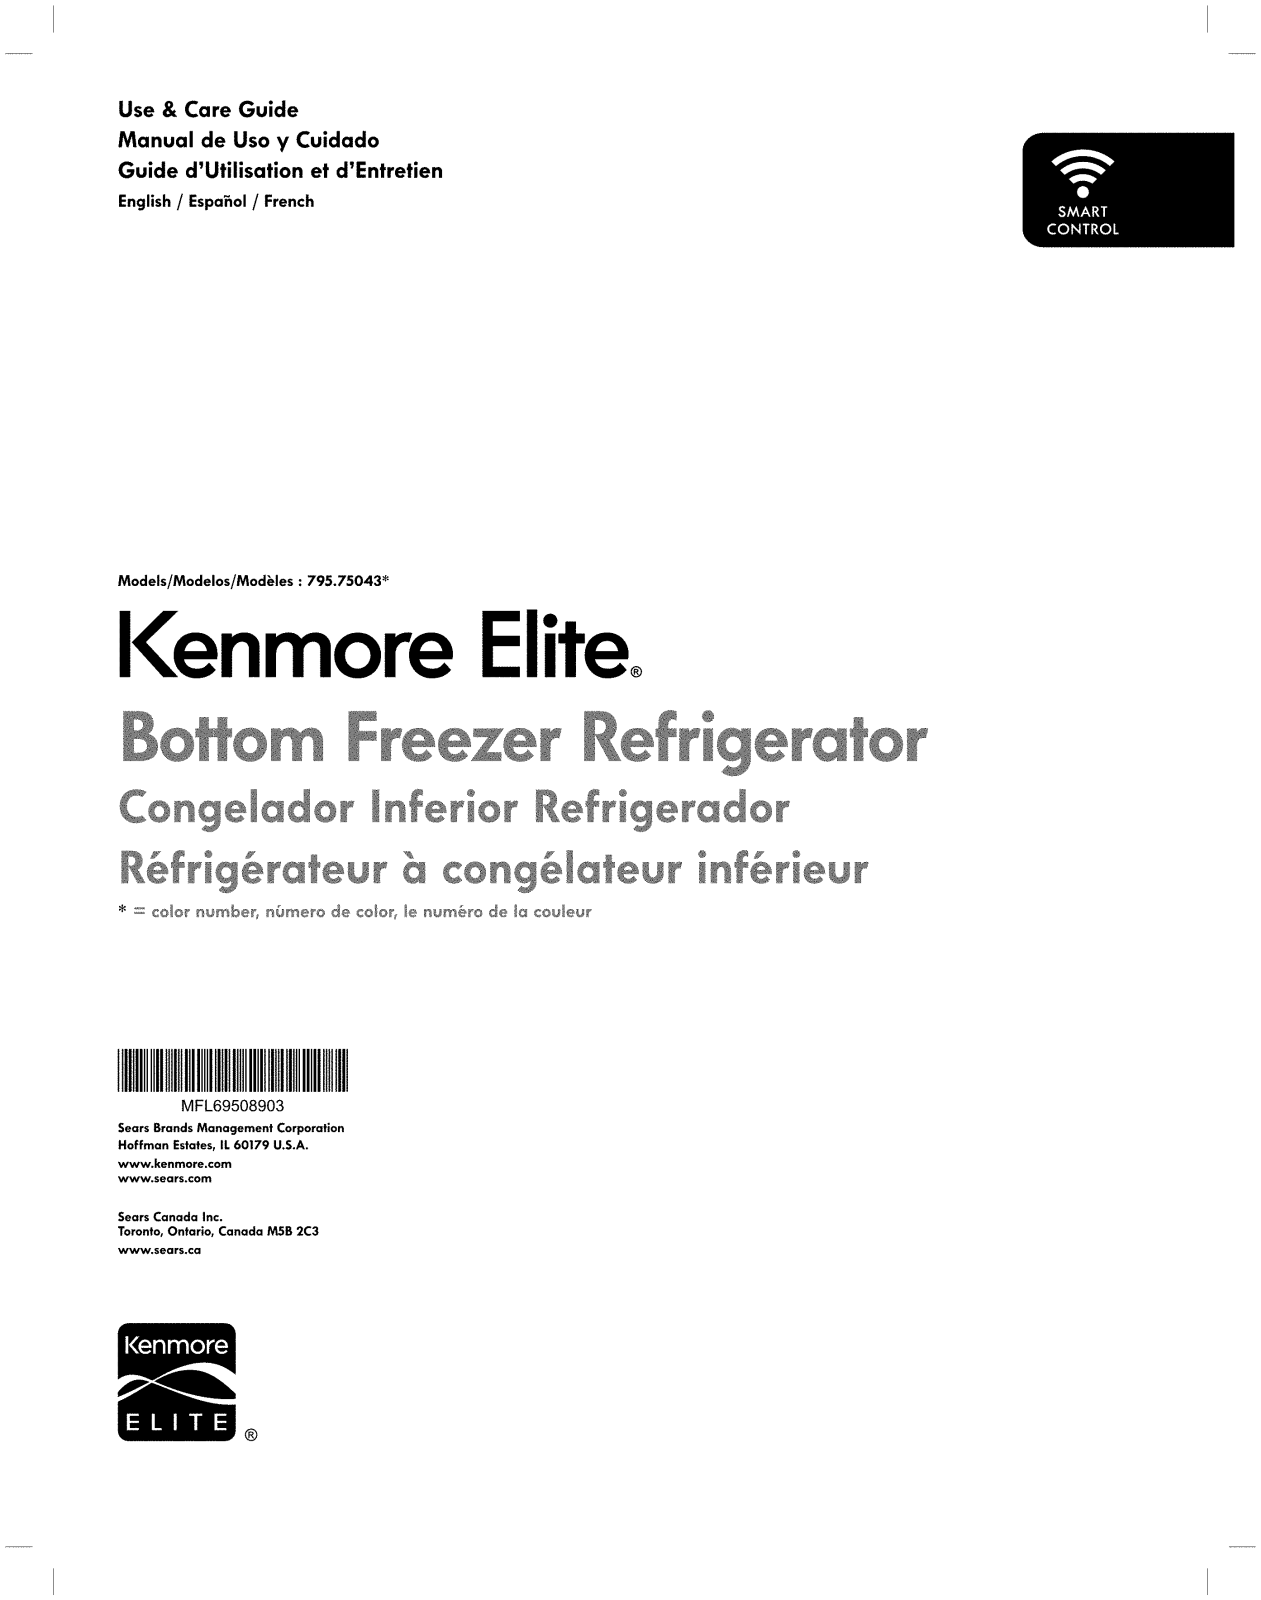 Kenmore Elite 79575049610, 79575043610, 79575042610 Owner’s Manual